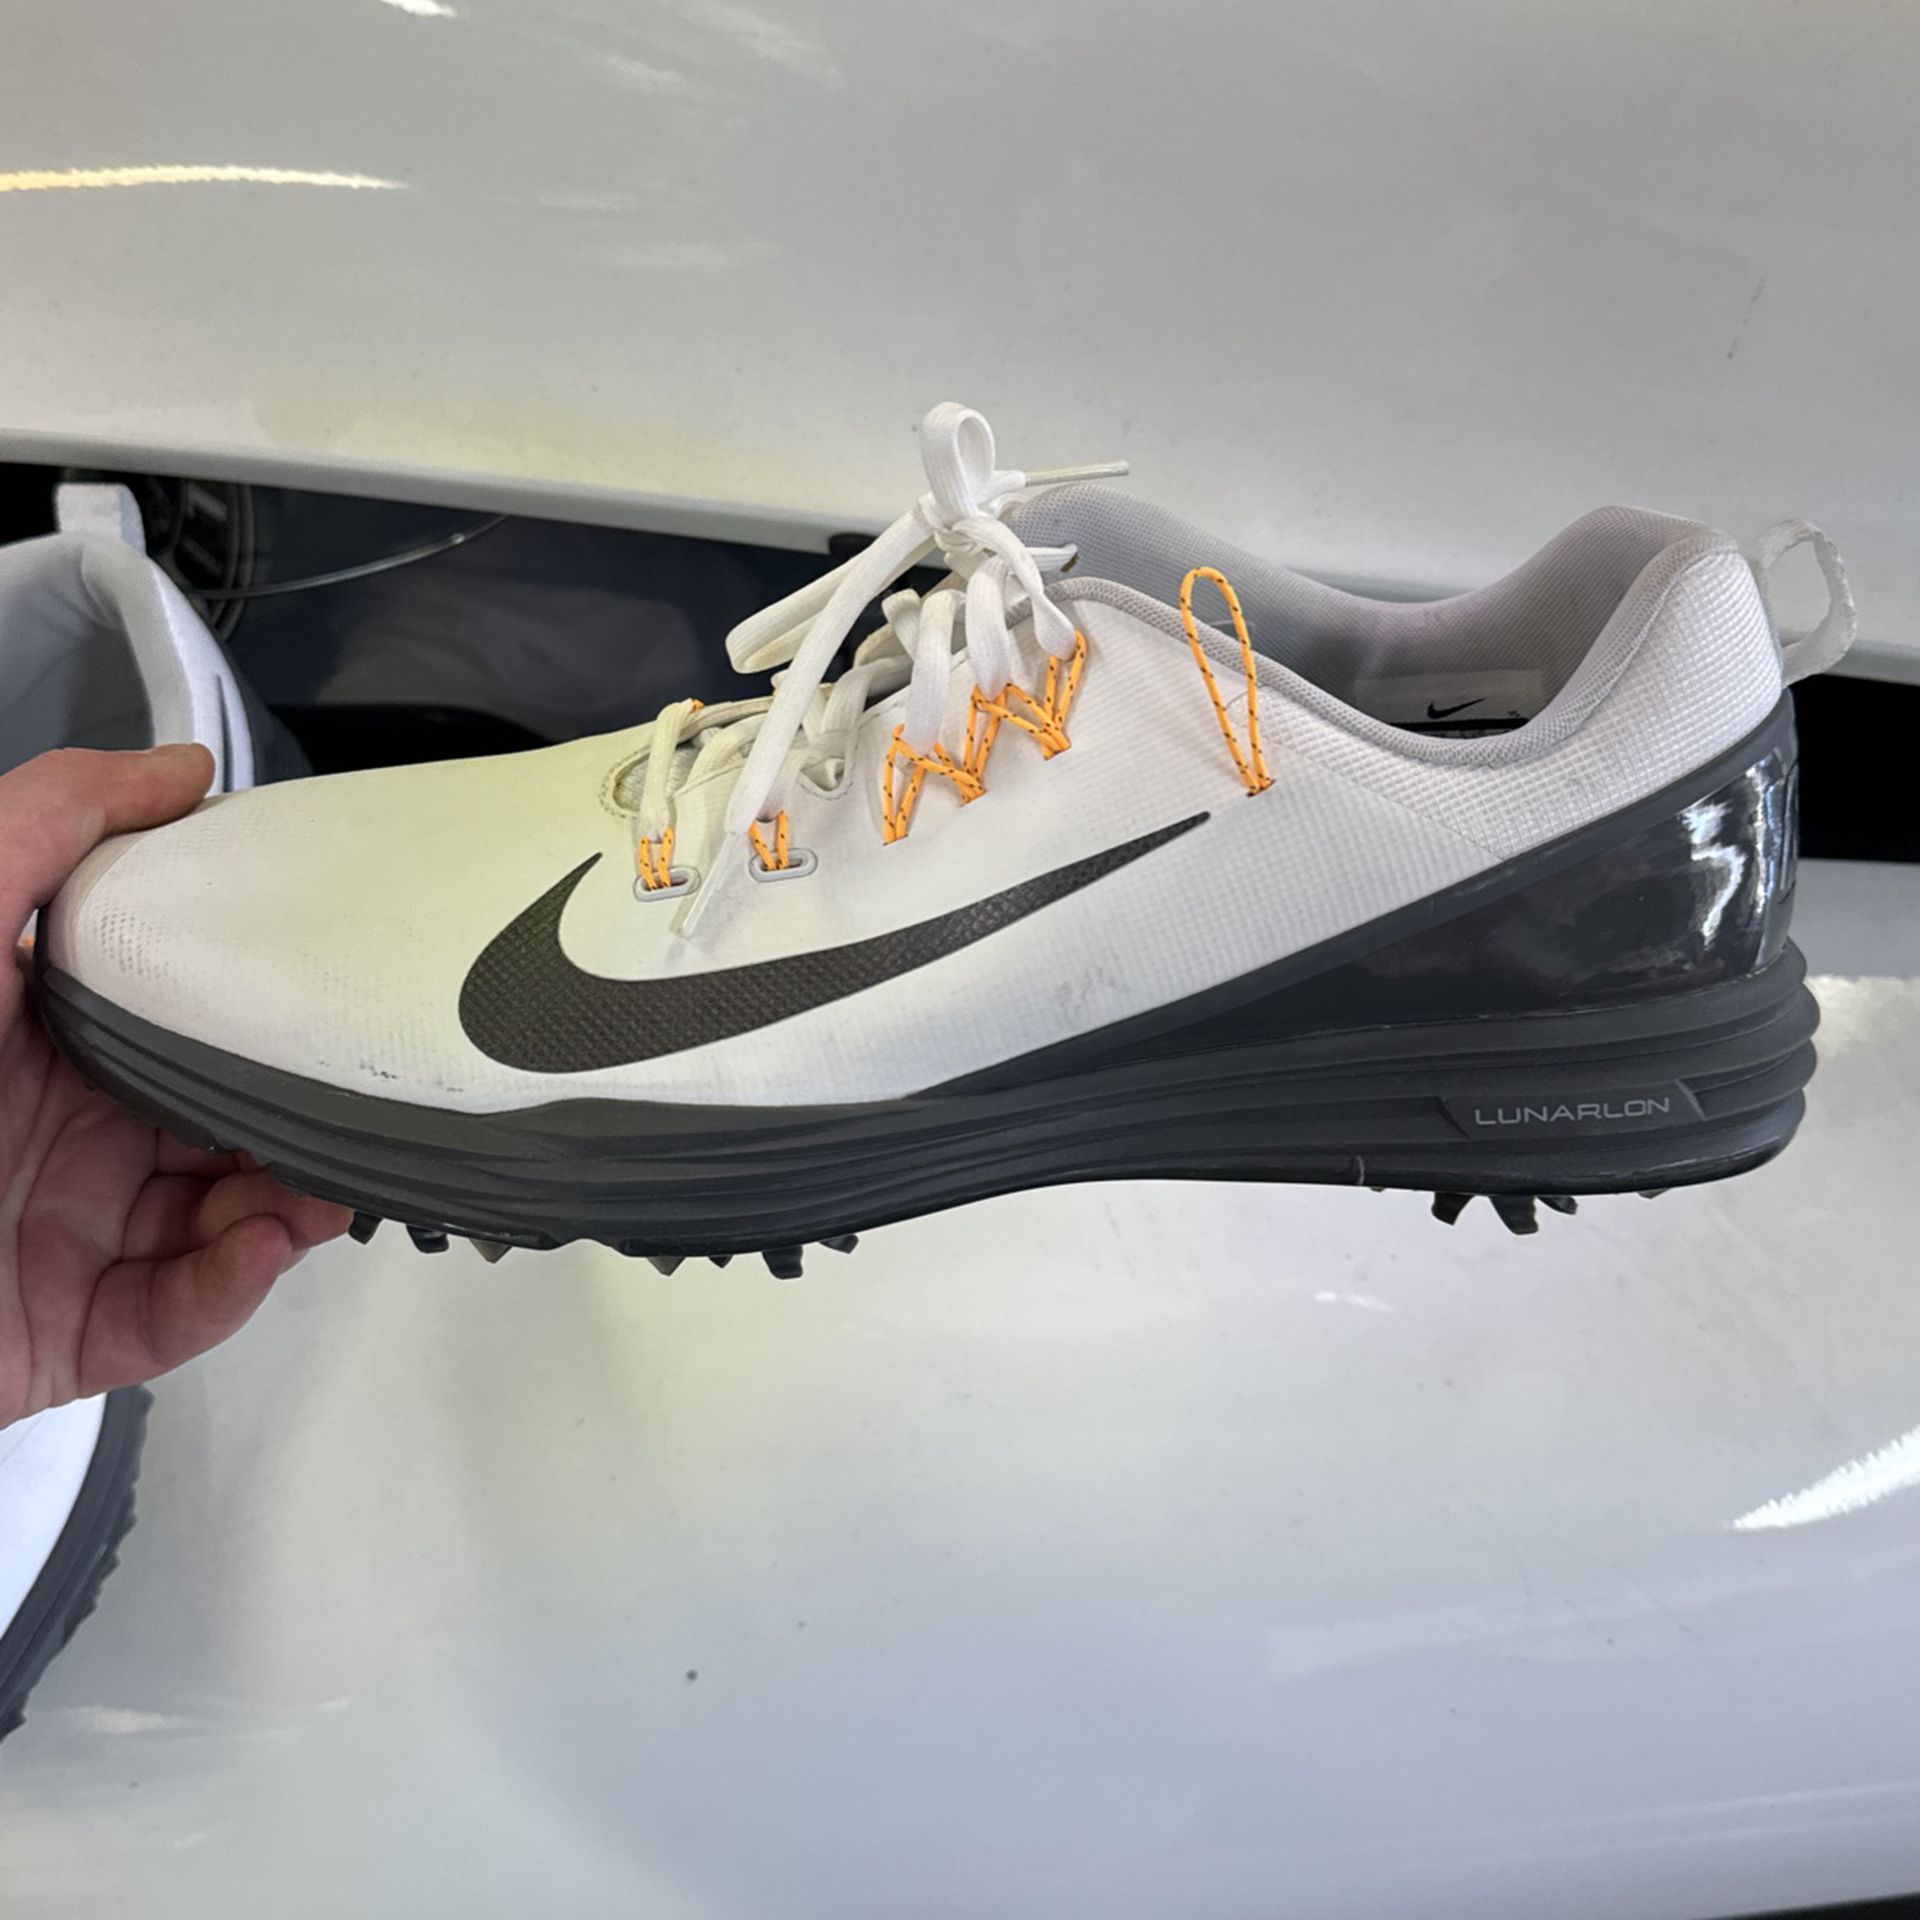 Nike Men's Lunar Command Golf Shoes